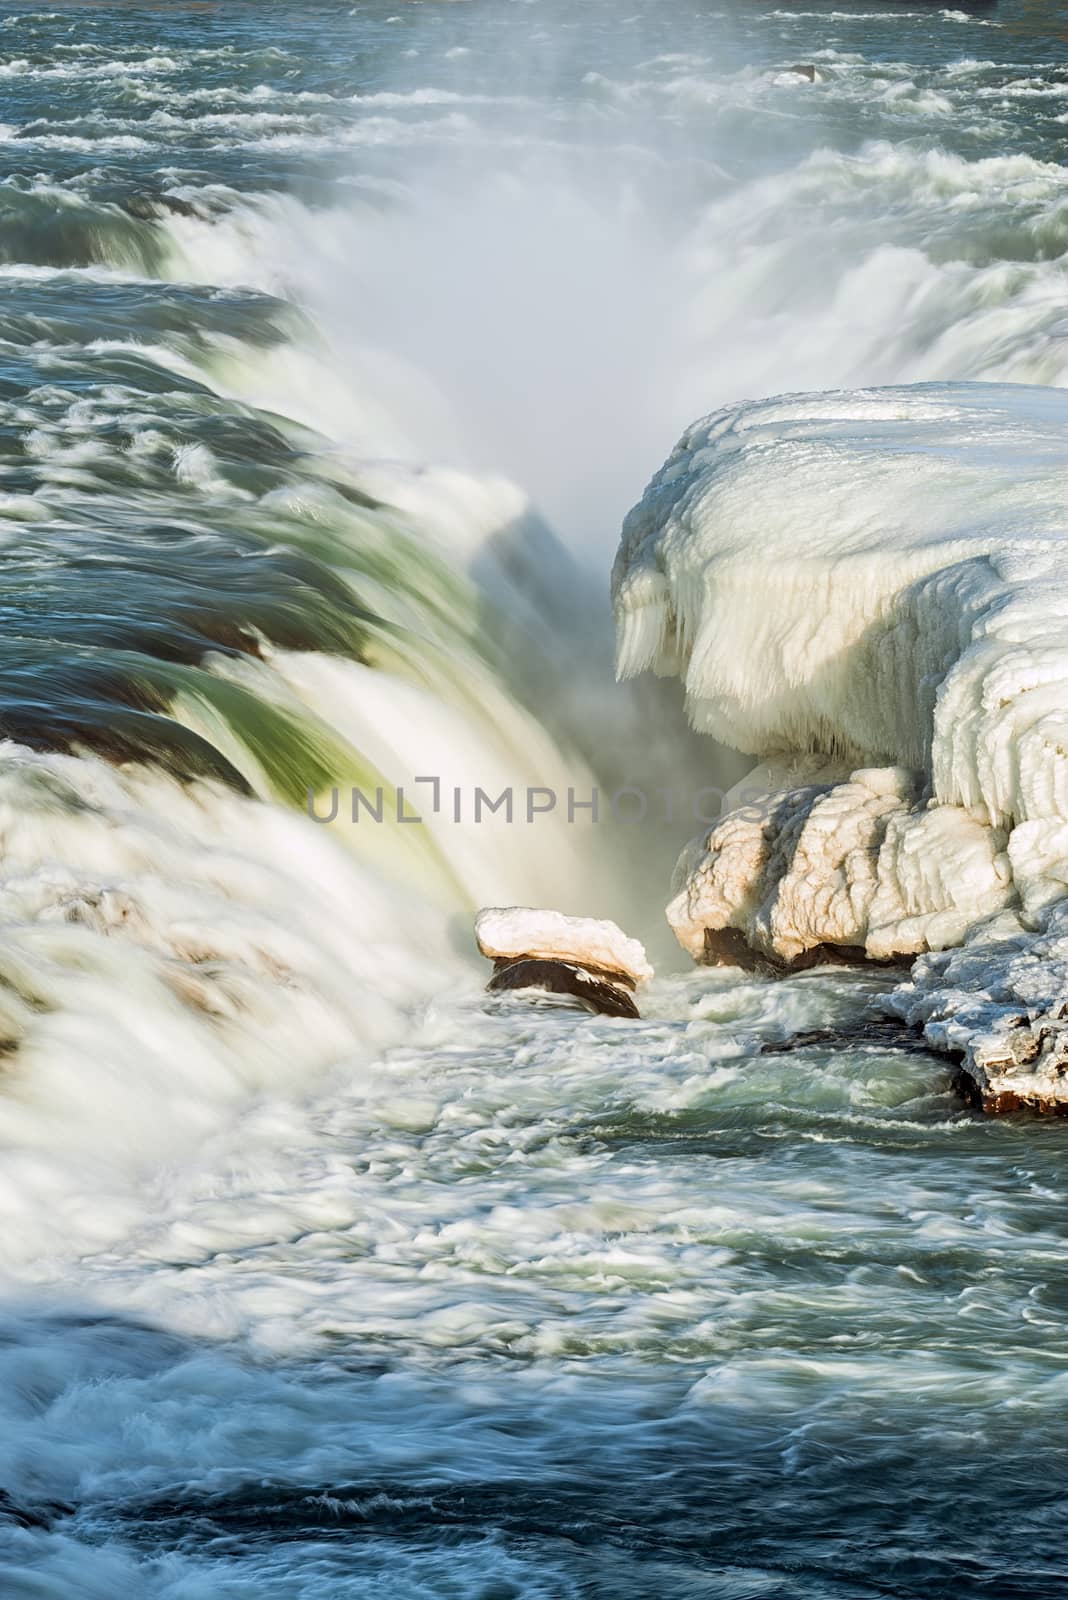 Urridafoss waterfall, Iceland by LuigiMorbidelli